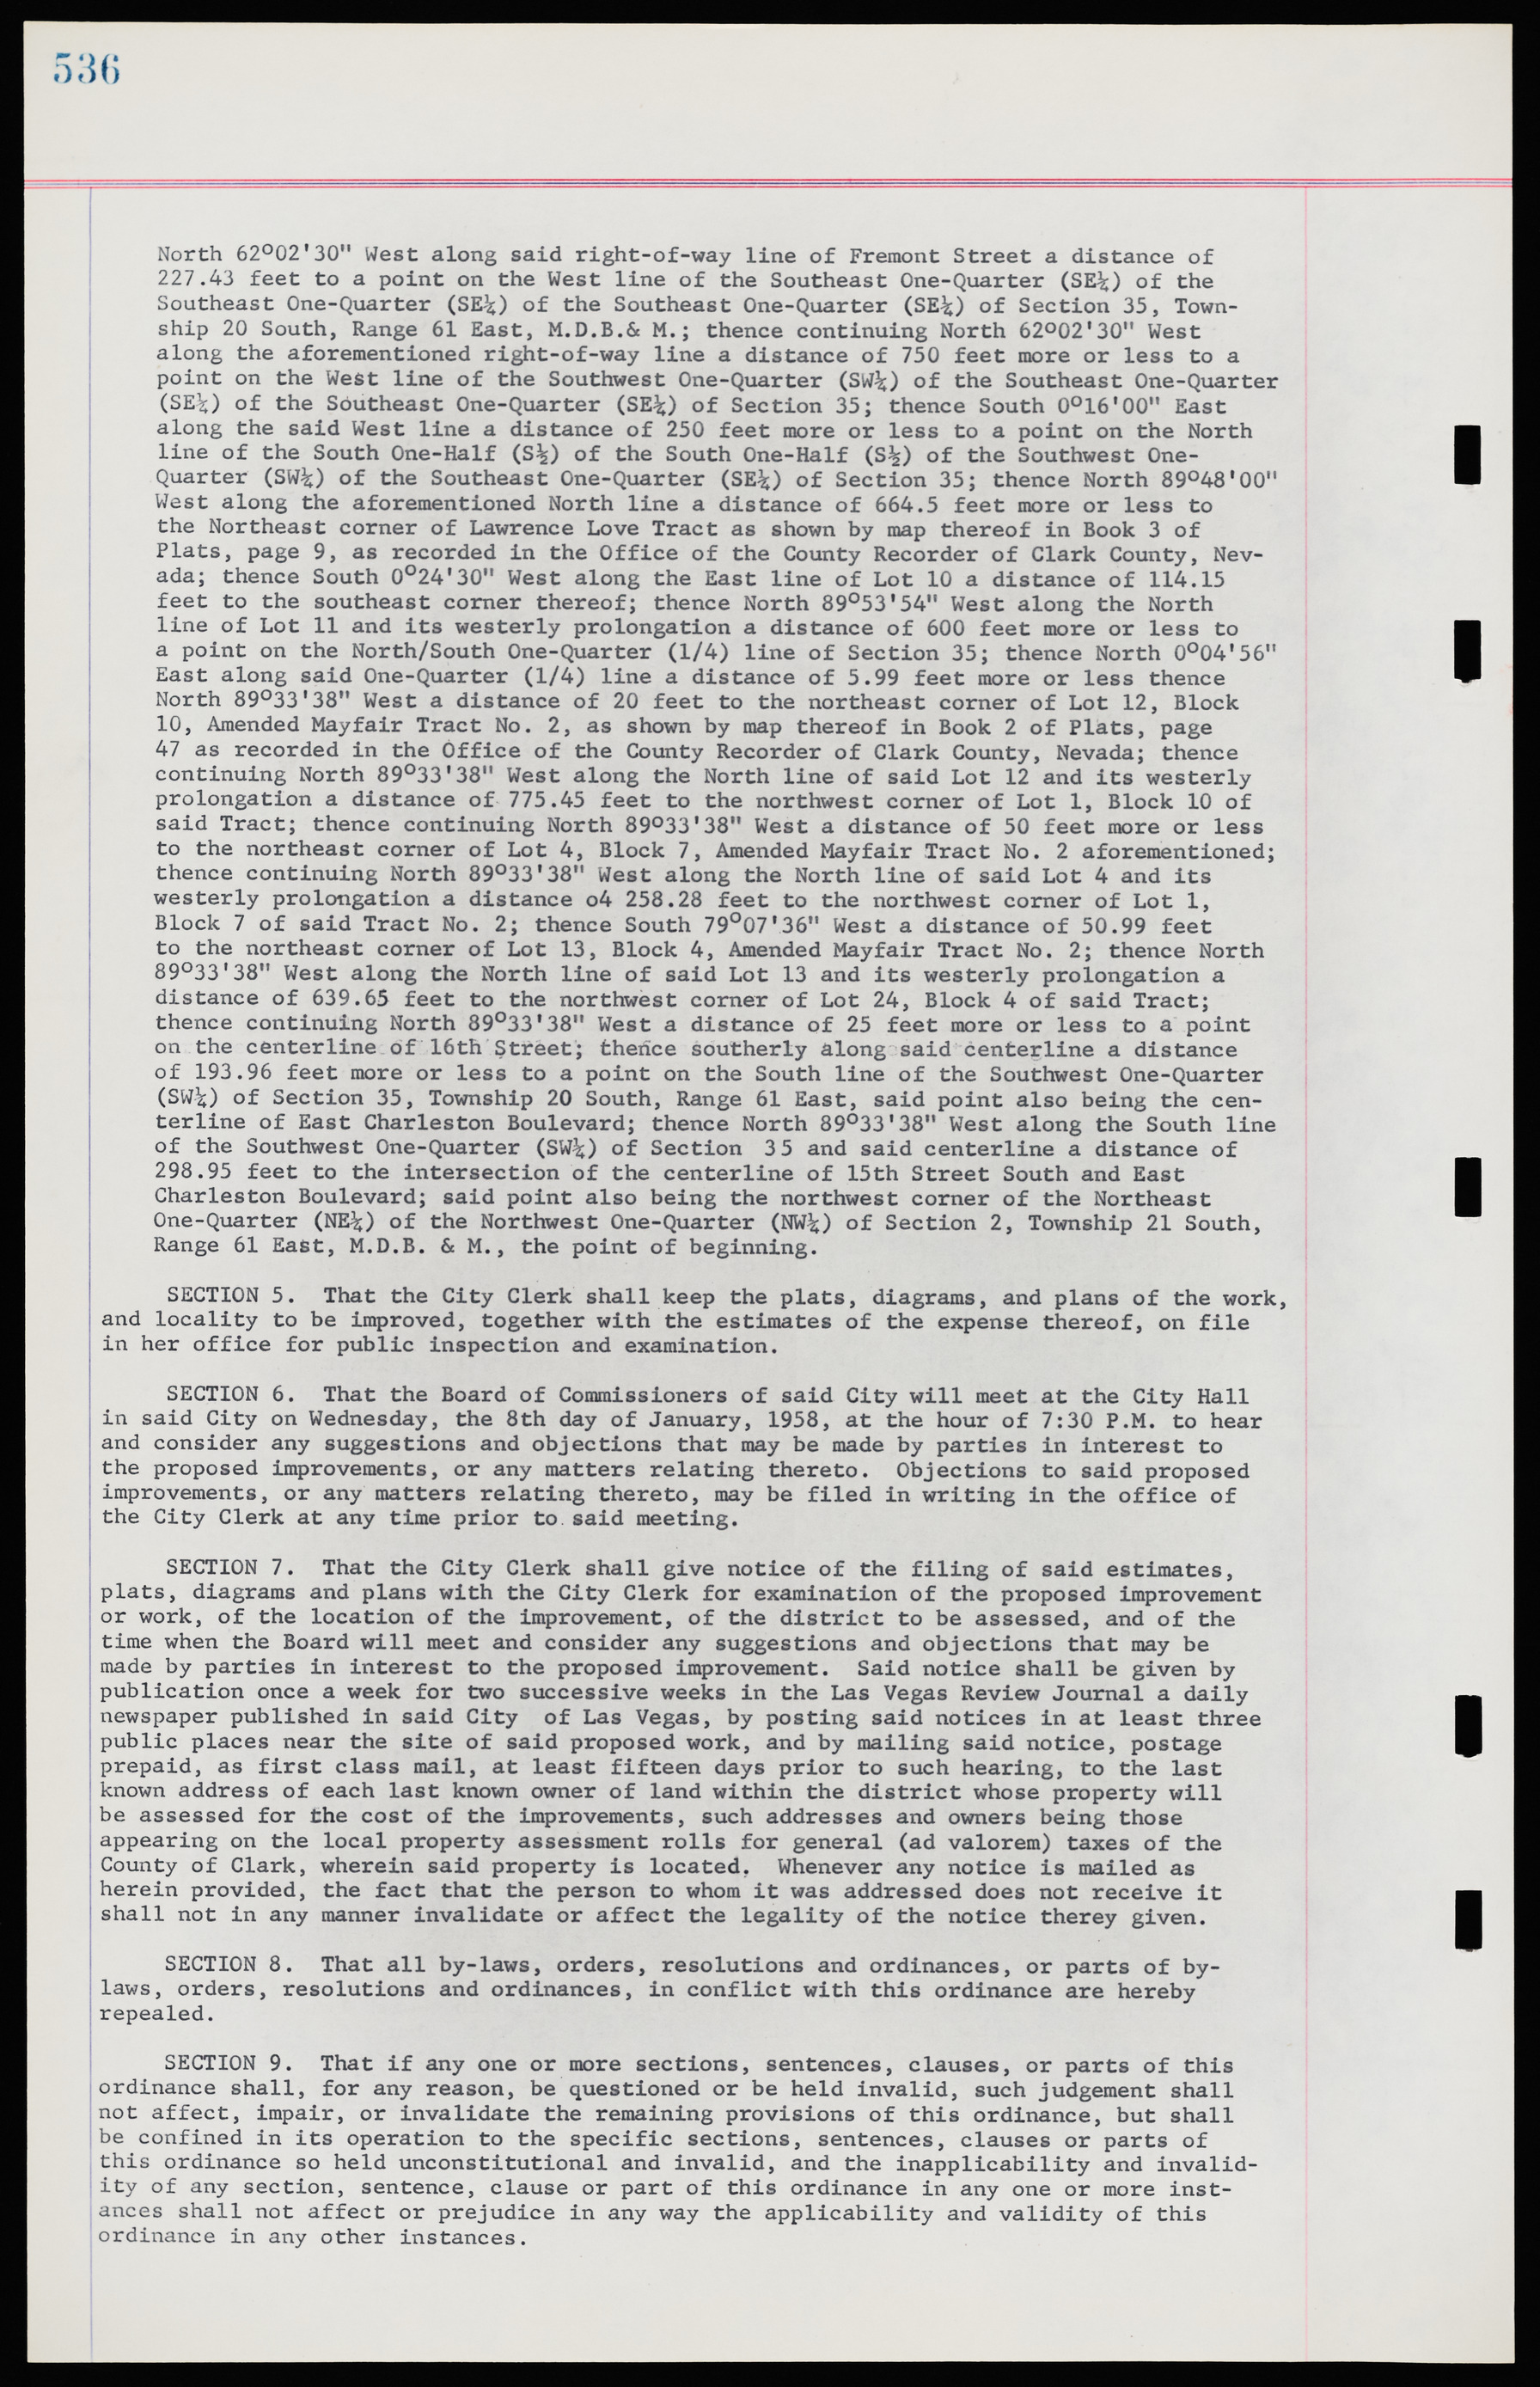 Las Vegas City Ordinances, November 13, 1950 to August 6, 1958, lvc000015-544